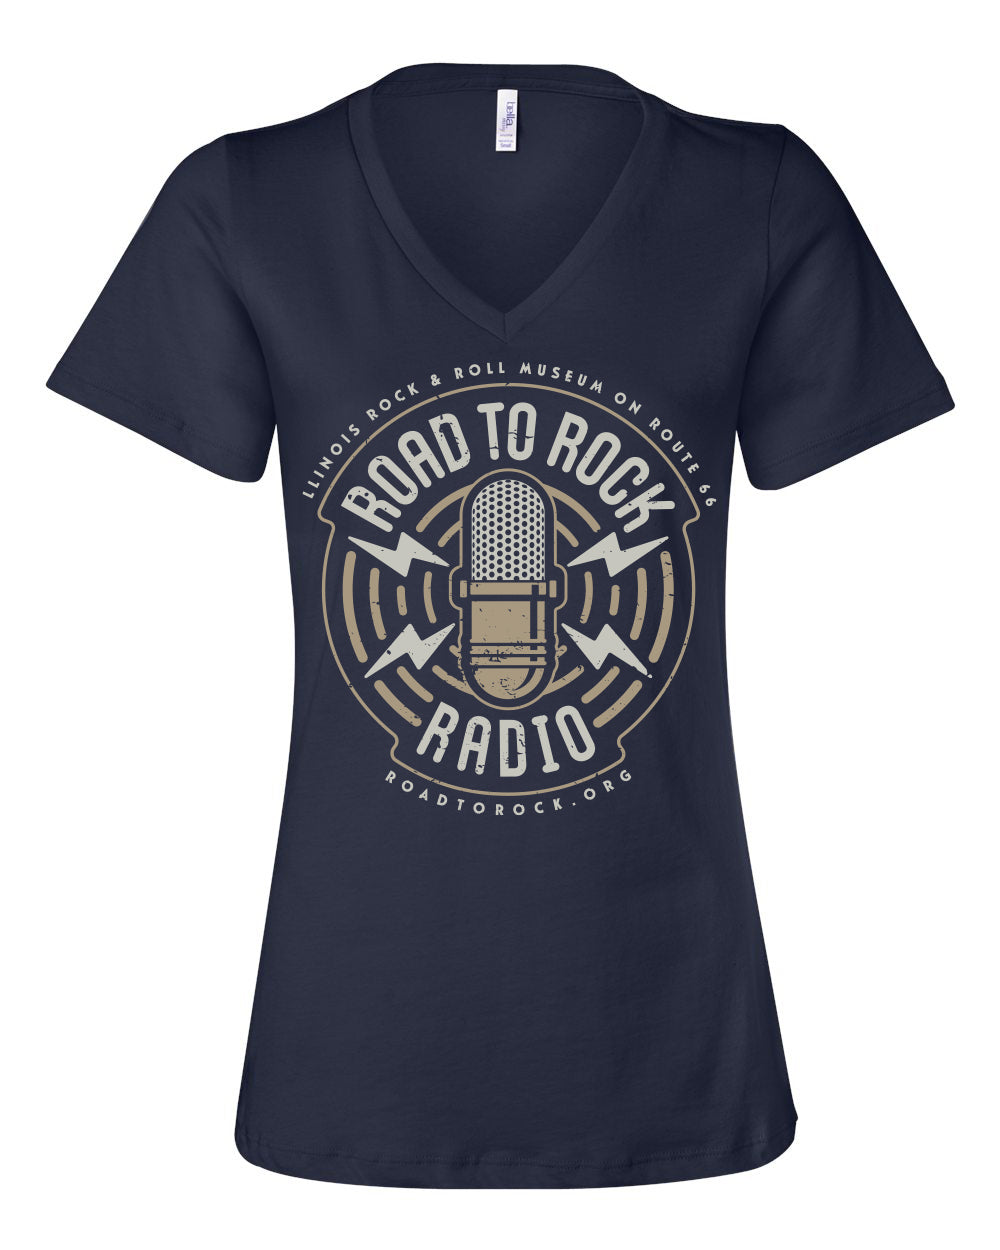 Women's Road to Rock Radio T-Shirt